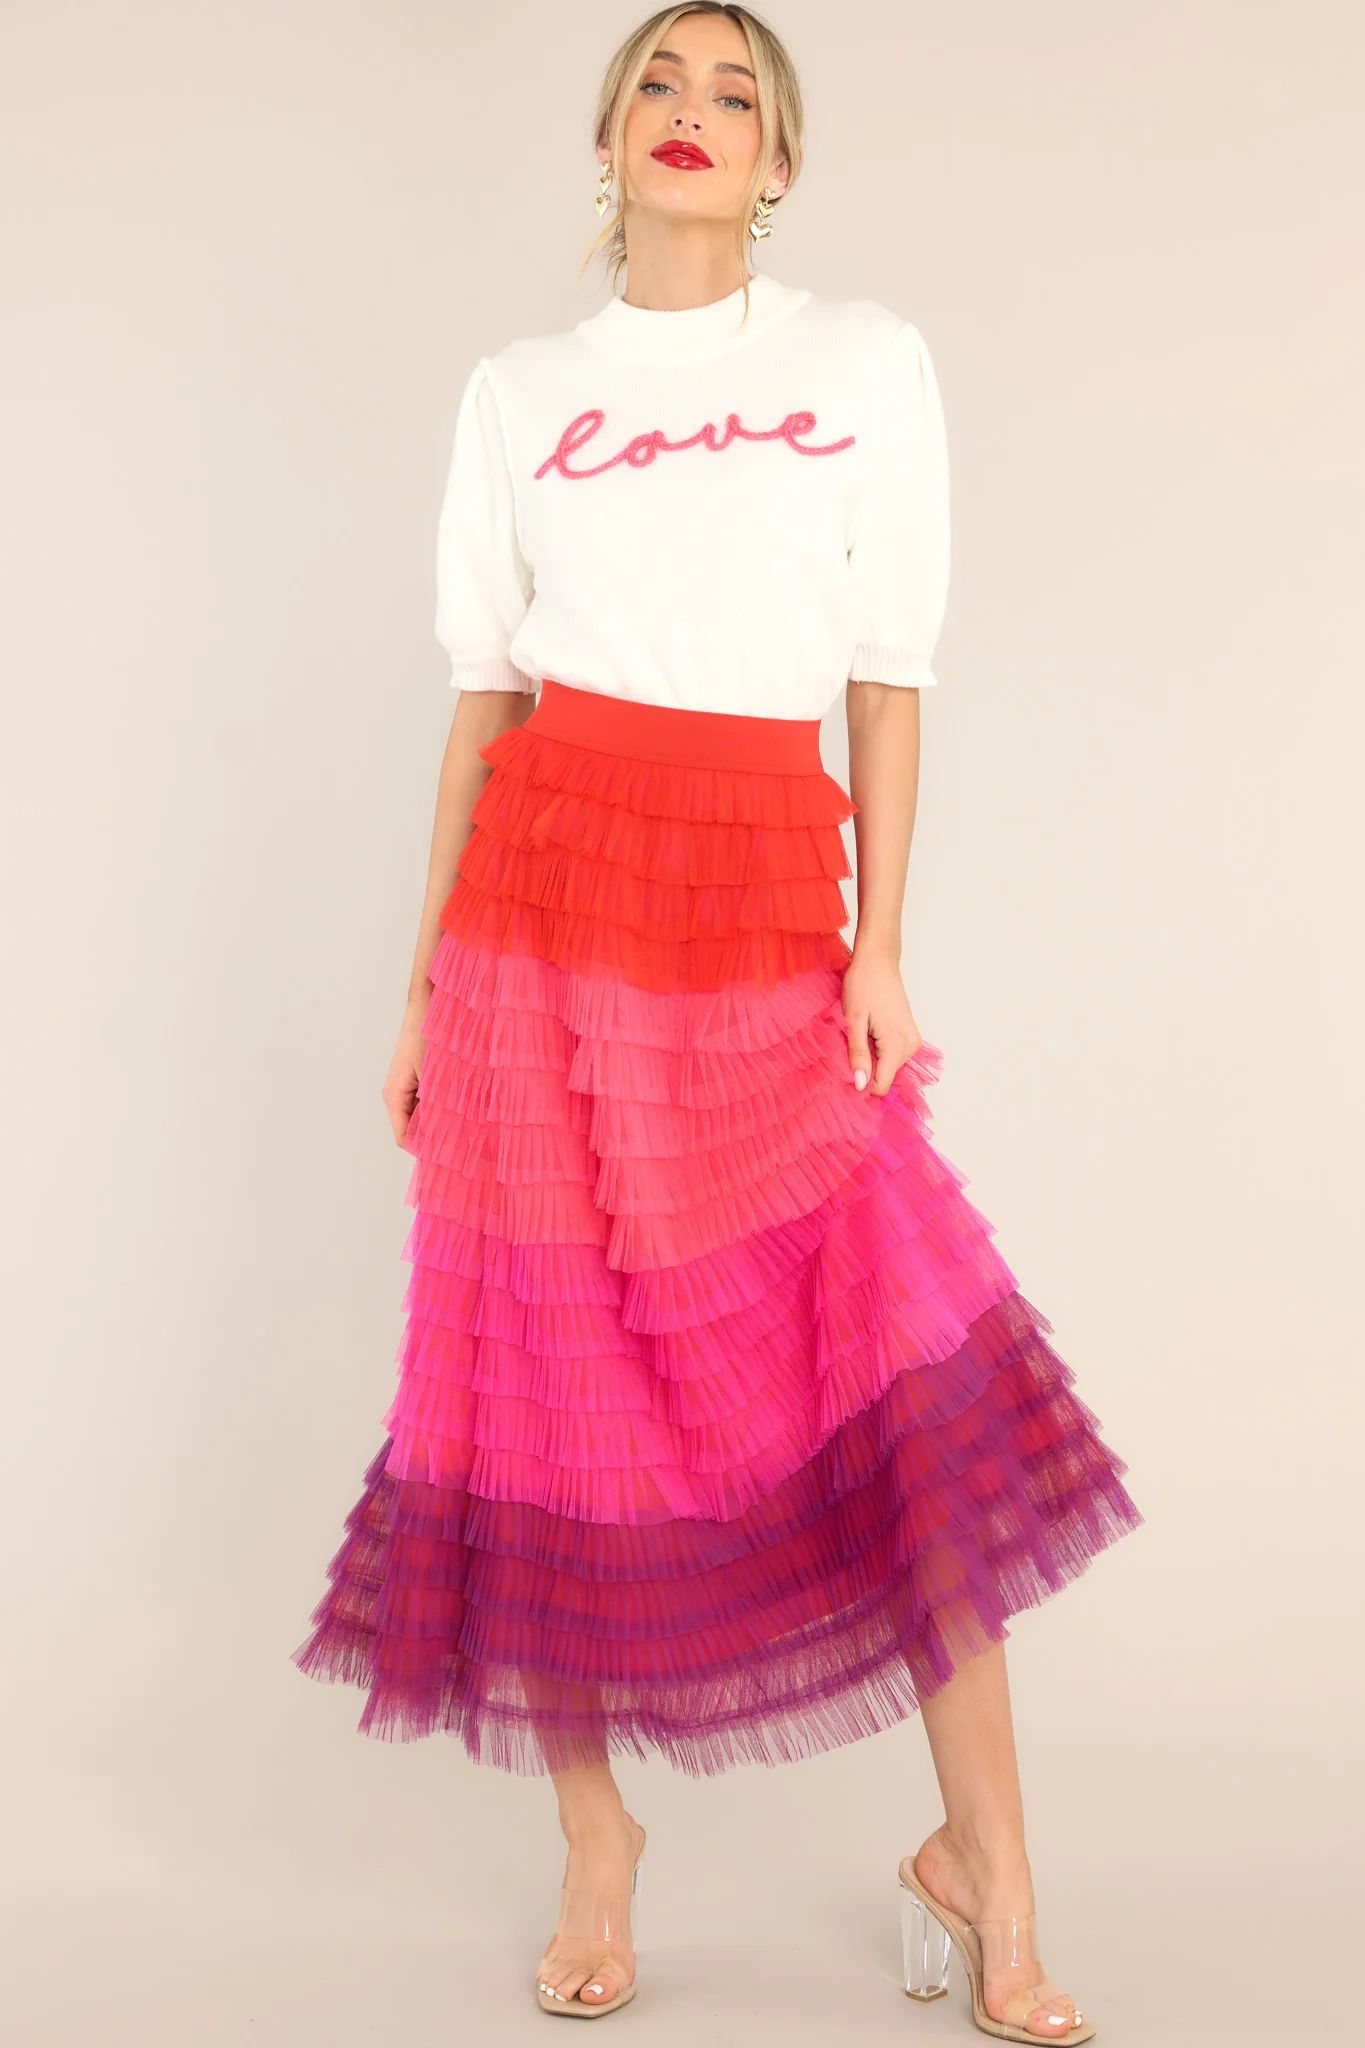 Break Down Walls Hot Pink Maxi Skirt | Red Dress 